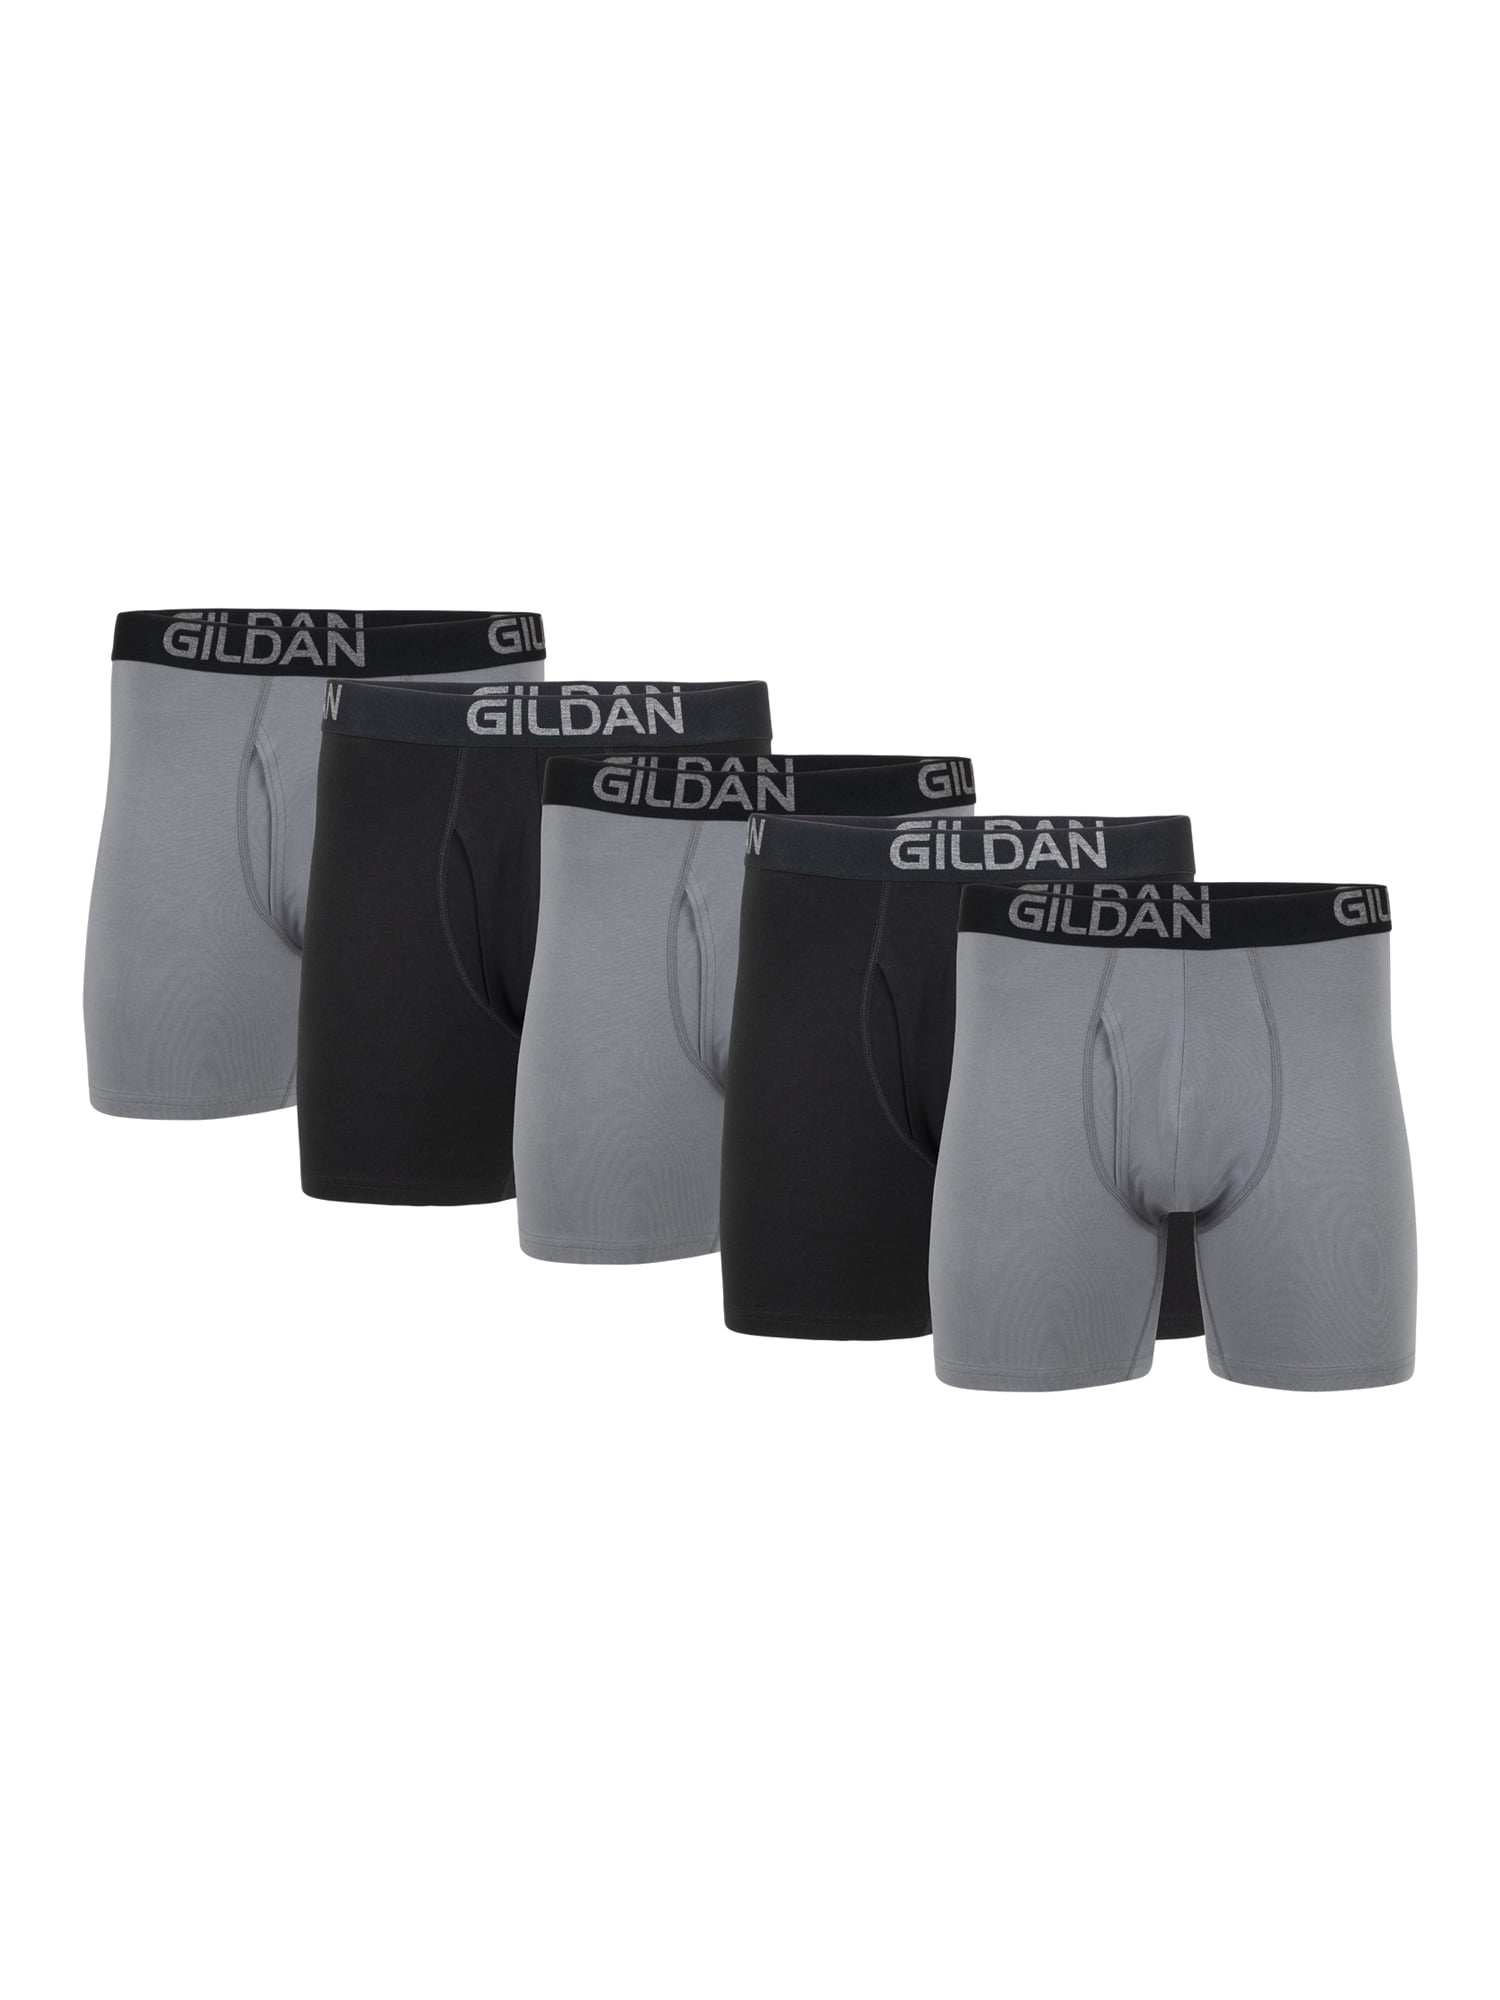 Gildan Men’s Medium Indigo Blue 100% Cotton Boxer Briefs (1 Pair) New